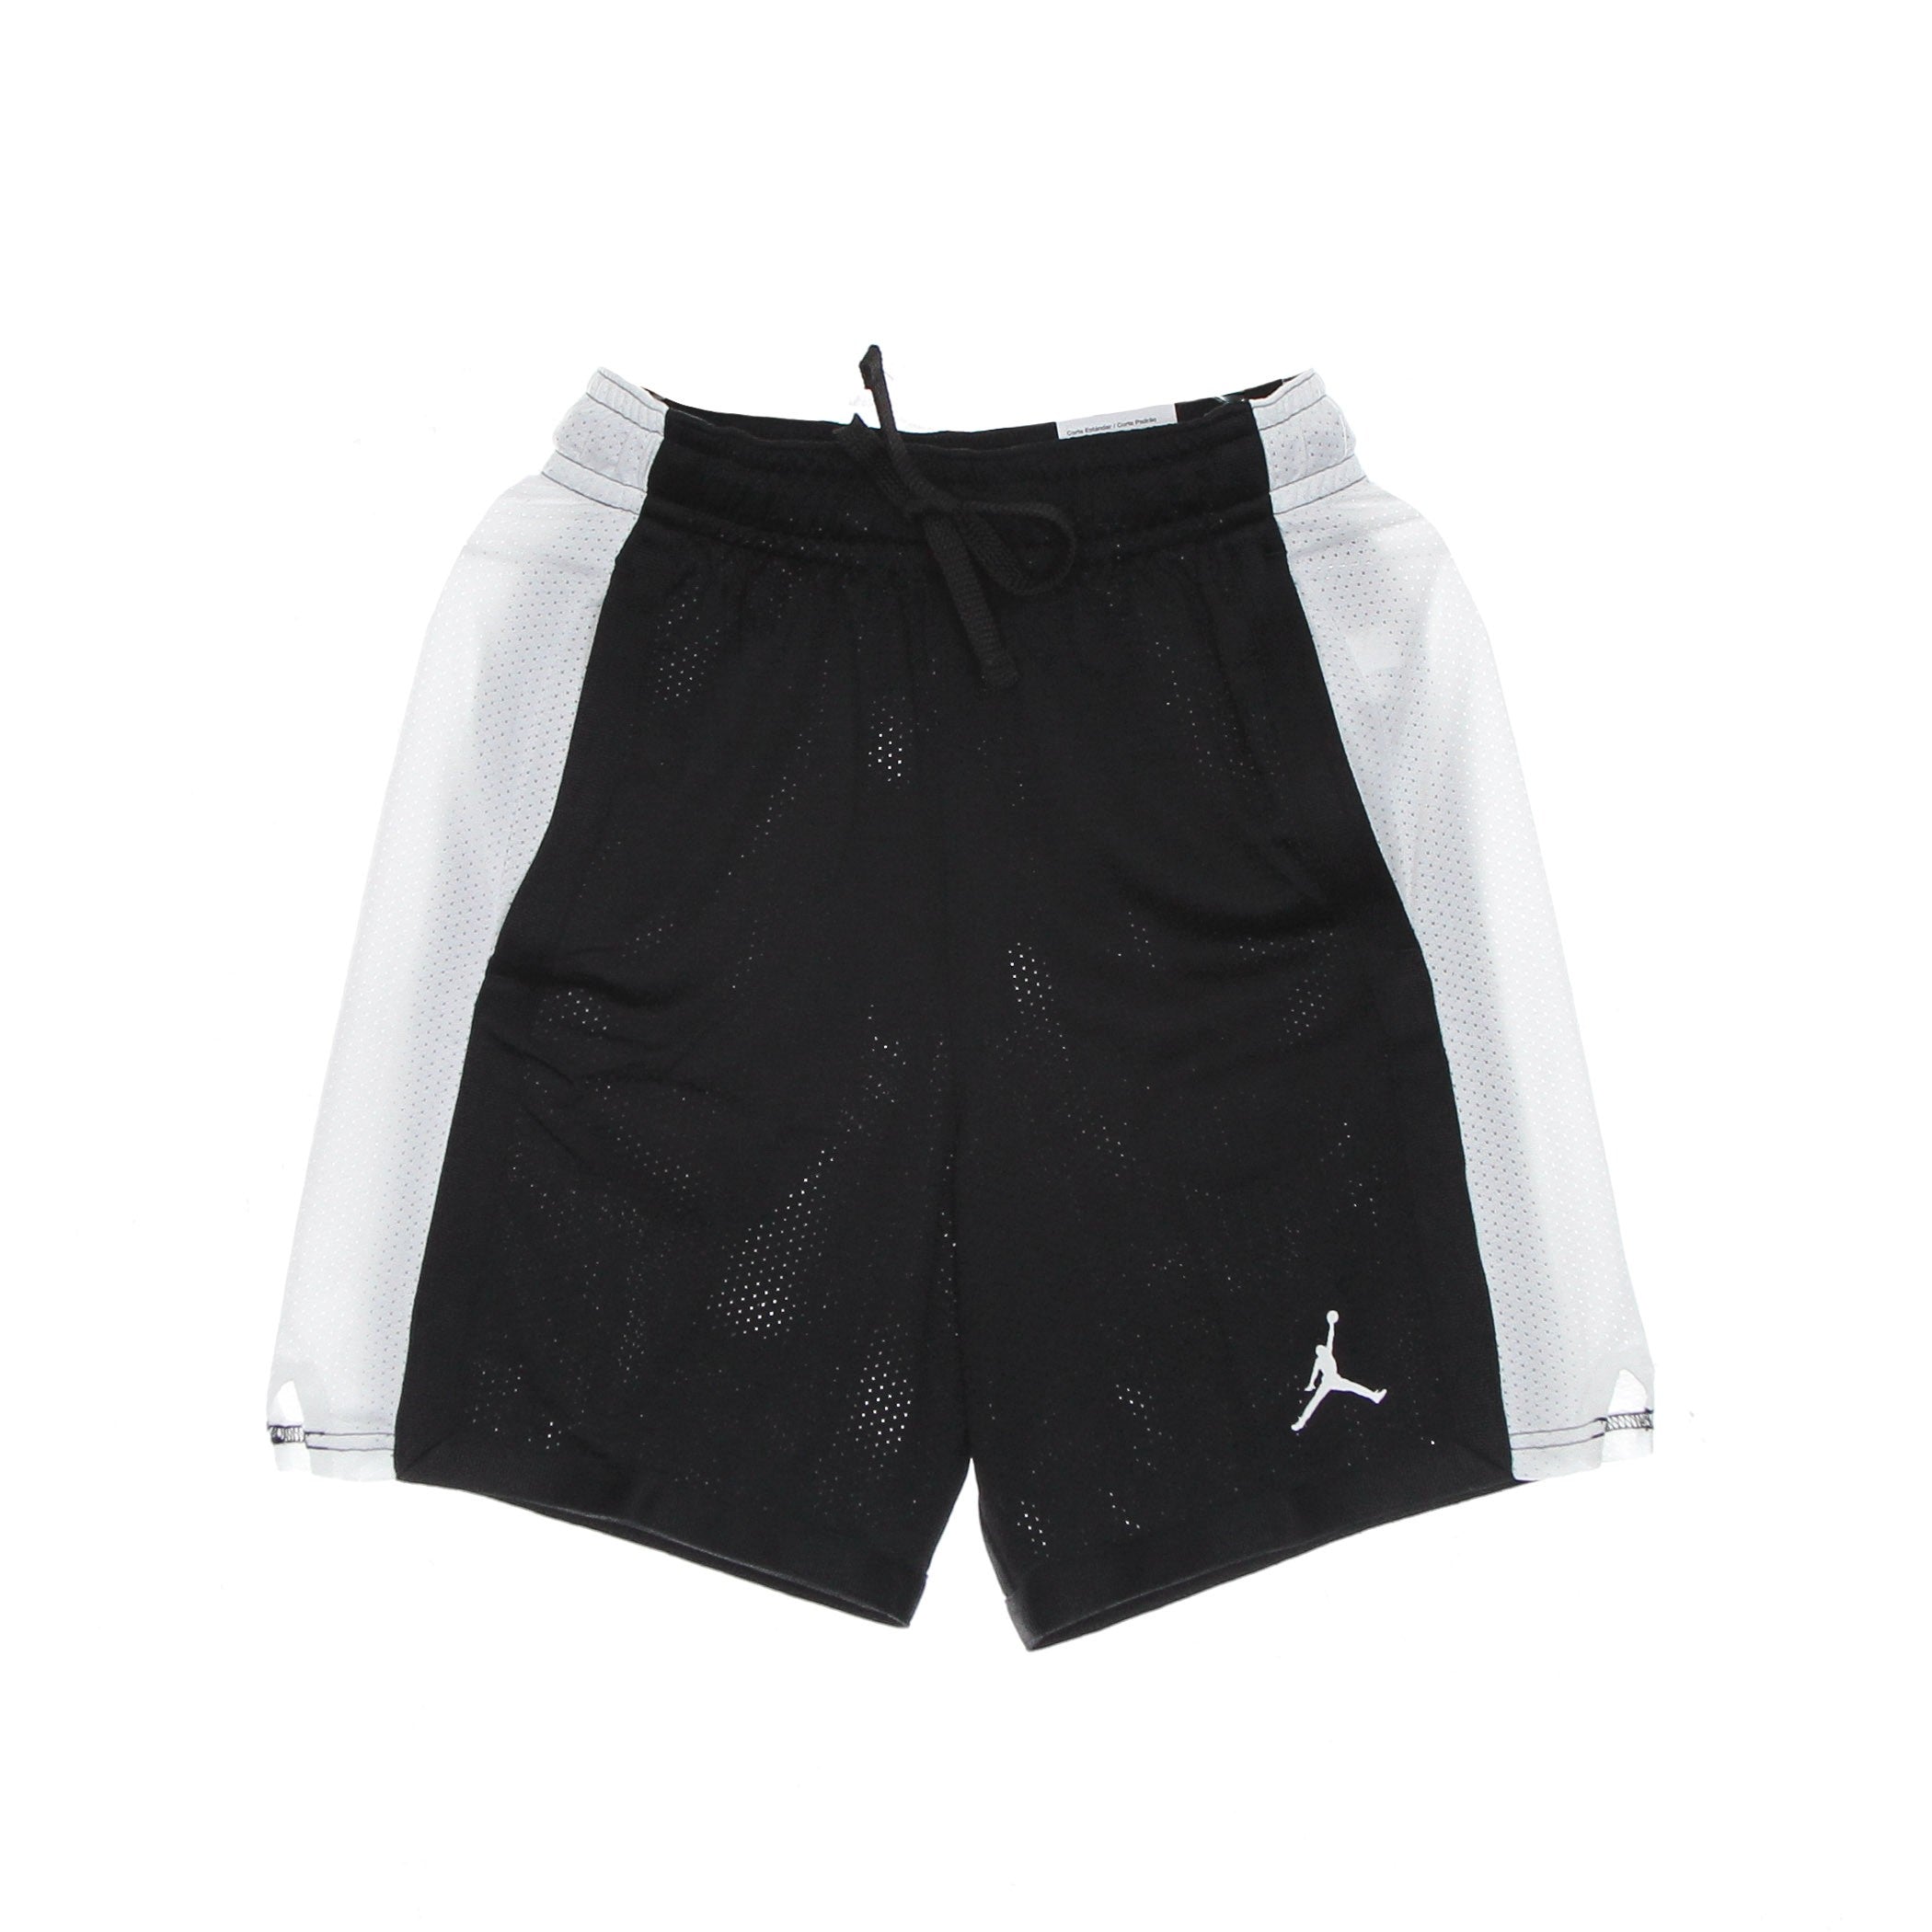 Men's Basketball Shorts Dri Fit Sport Mesh Short Black/white/white